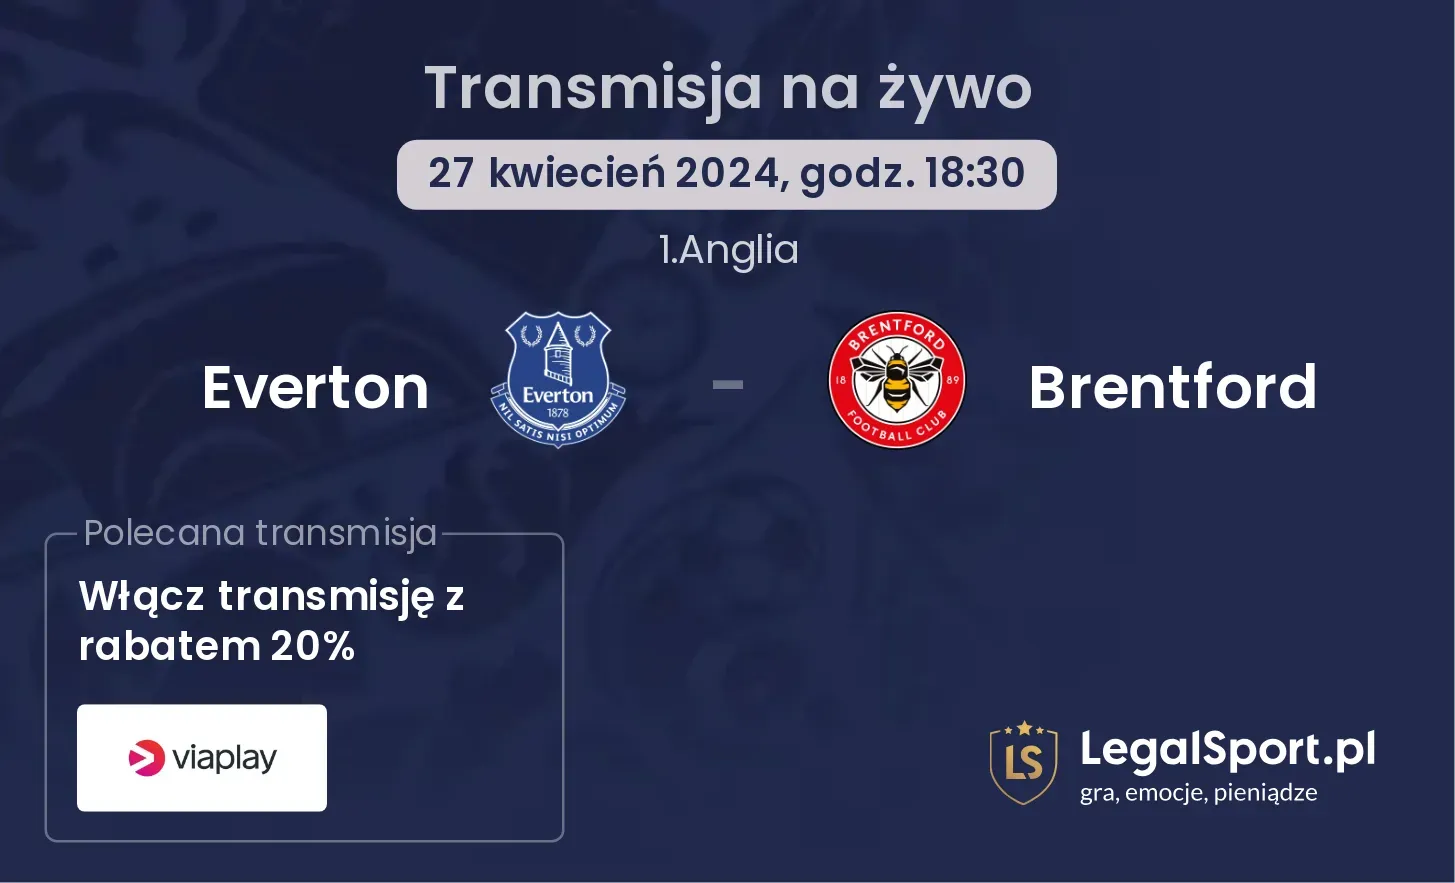 Everton - Brentford transmisja na żywo